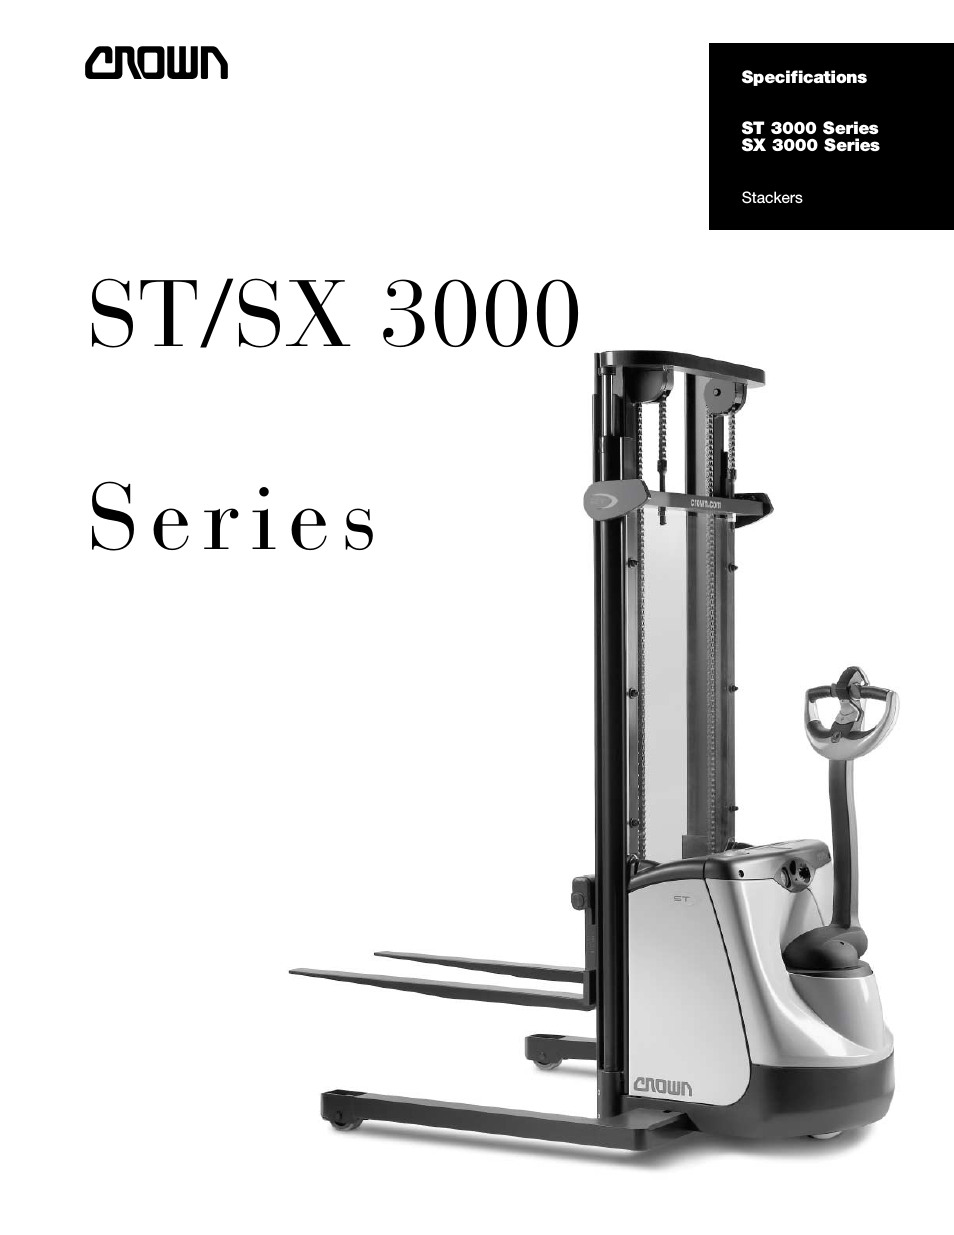 SX 3000 Series